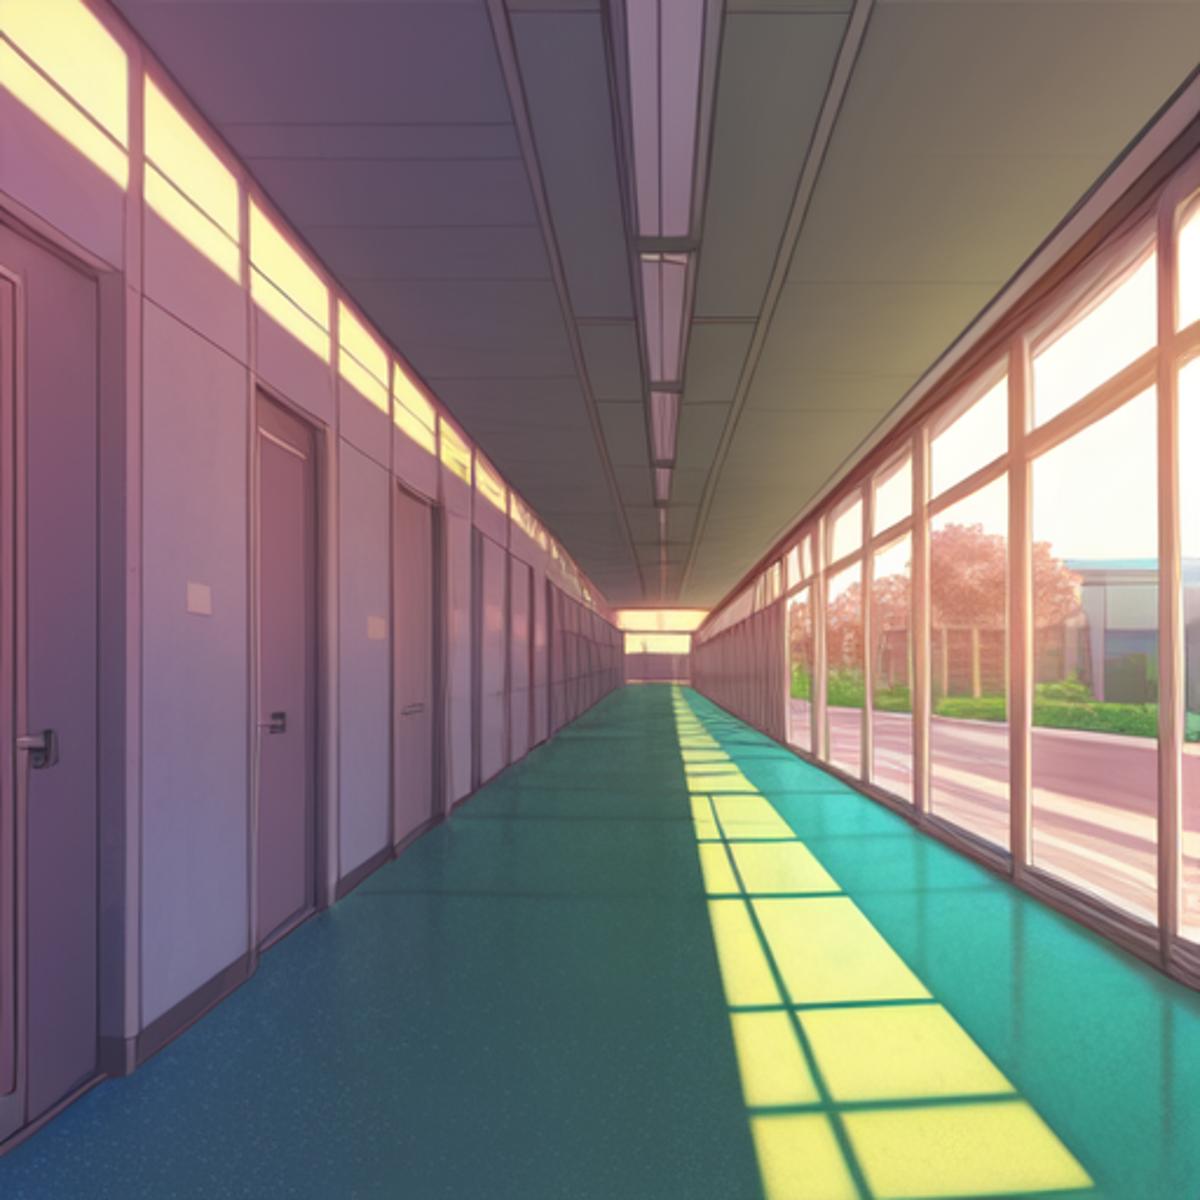 school hallway background anime